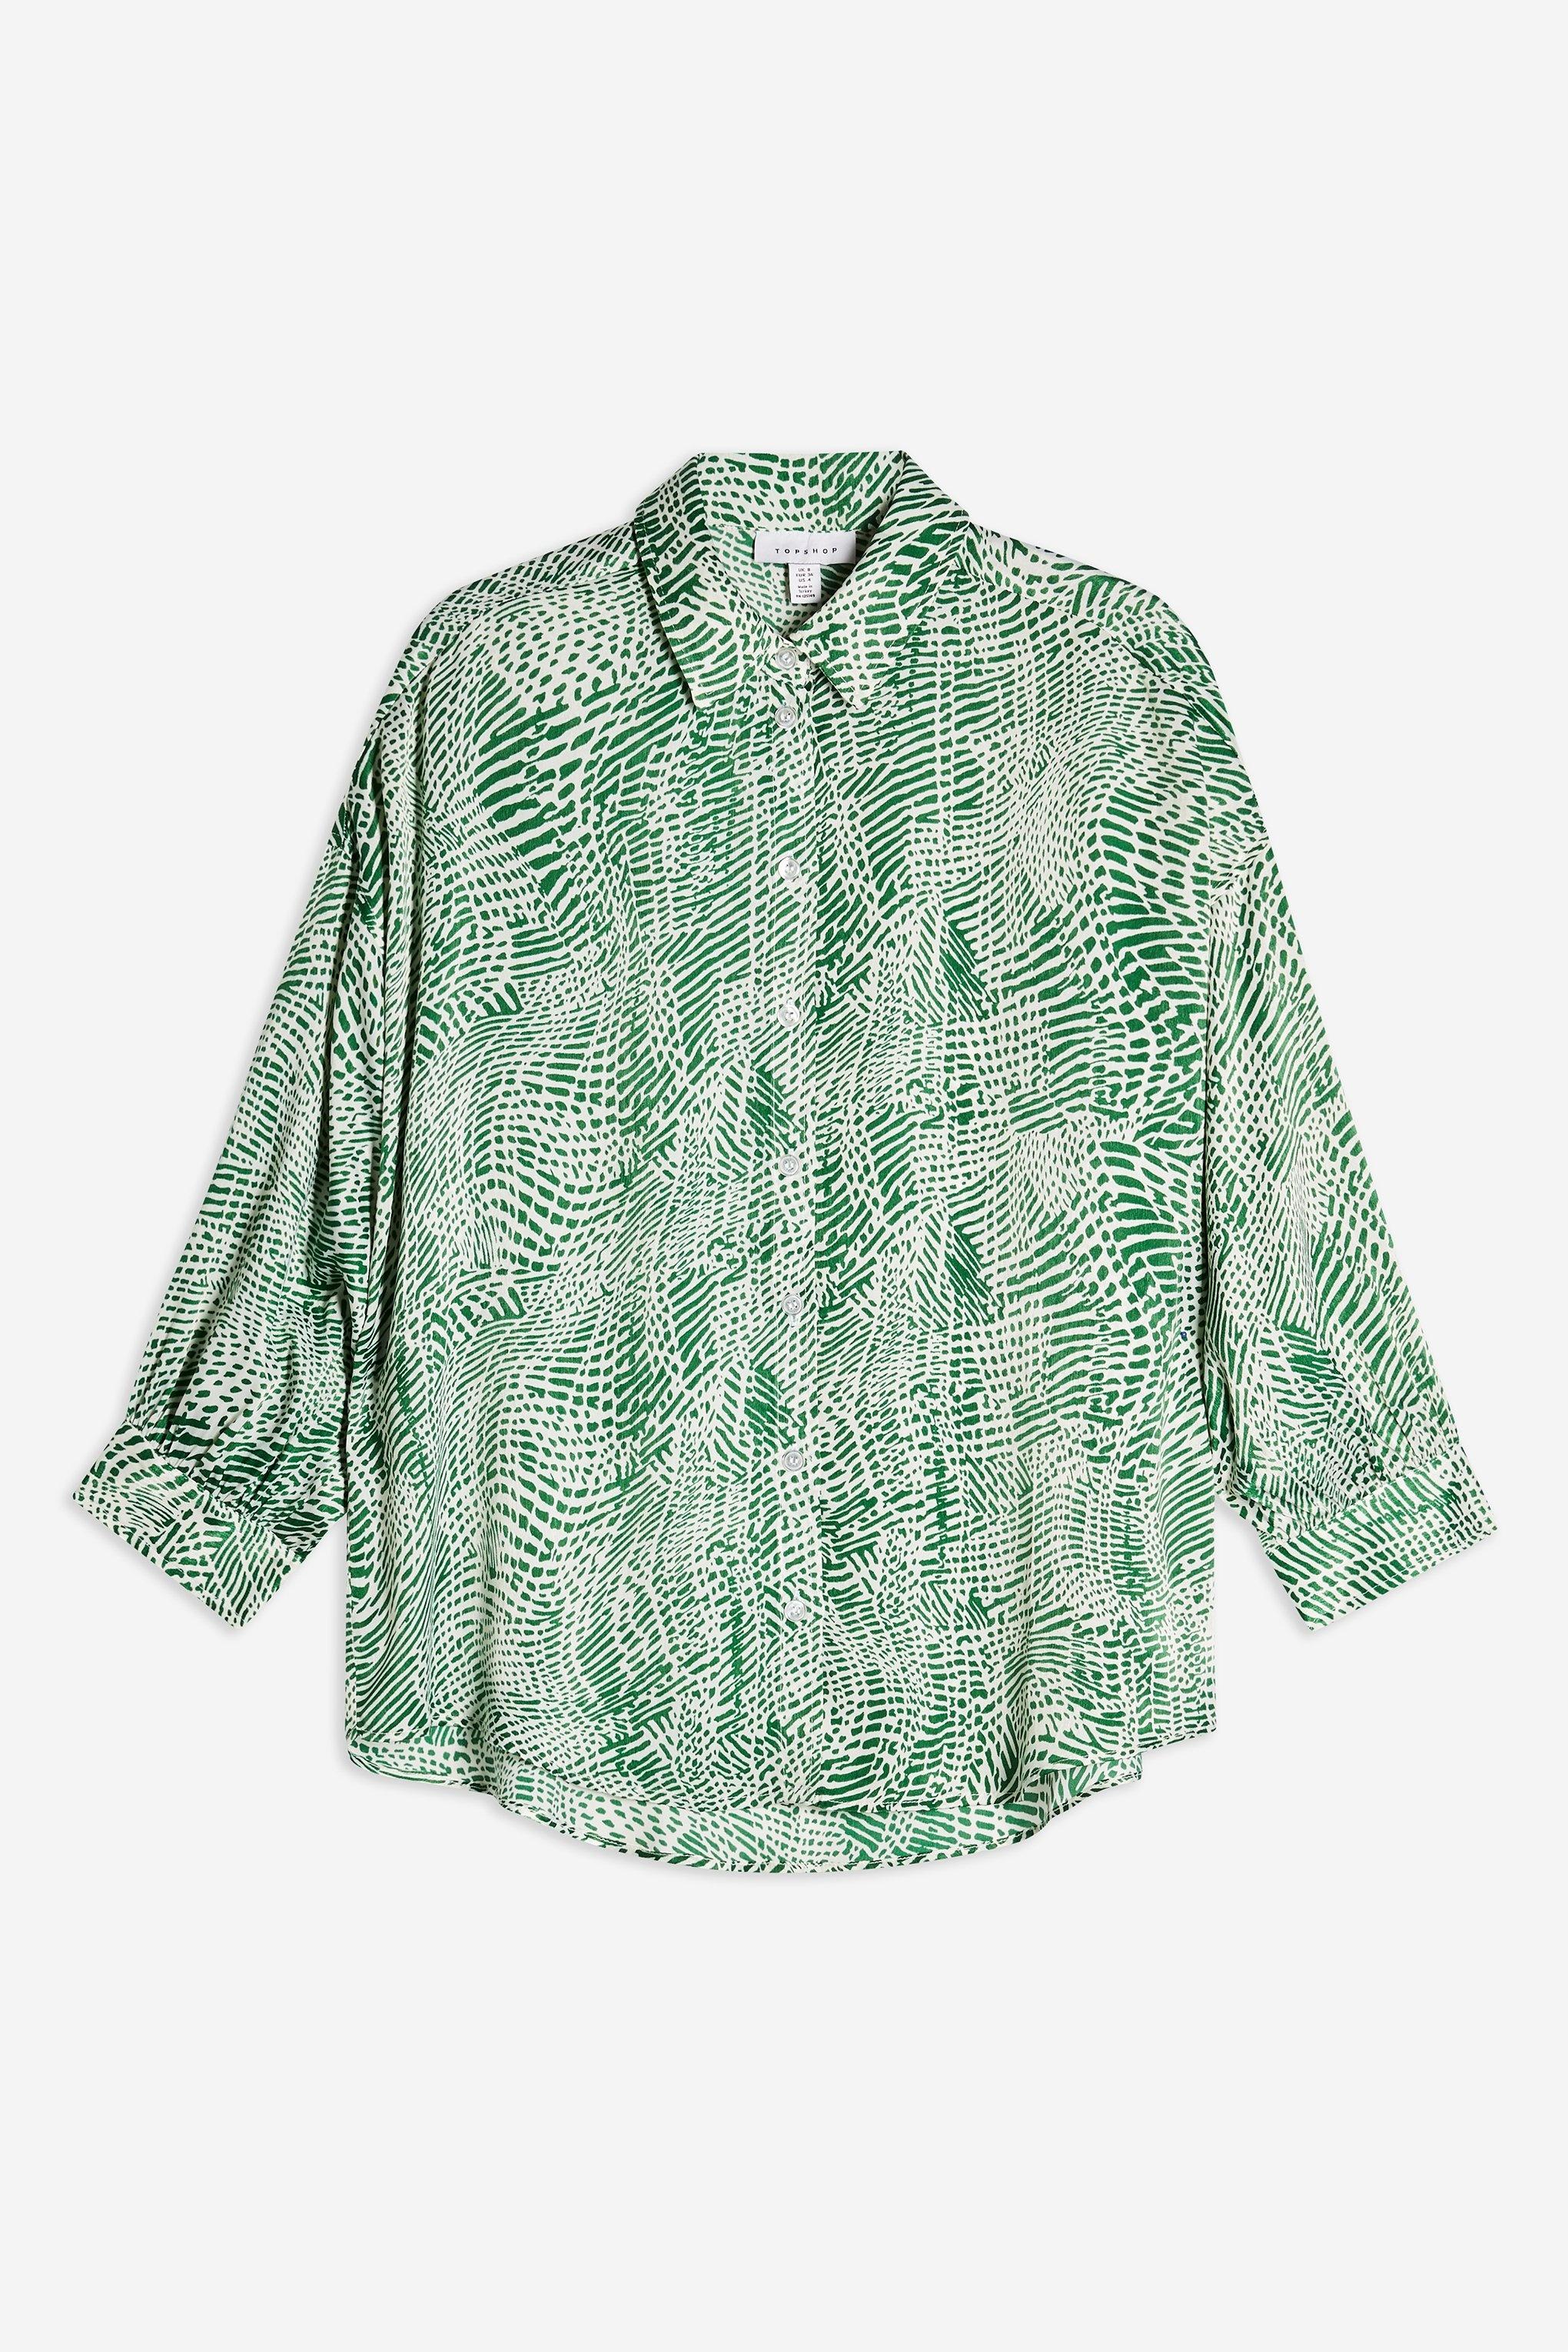 TOPSHOP Synthetic Green Zebra Print Shirt - Lyst